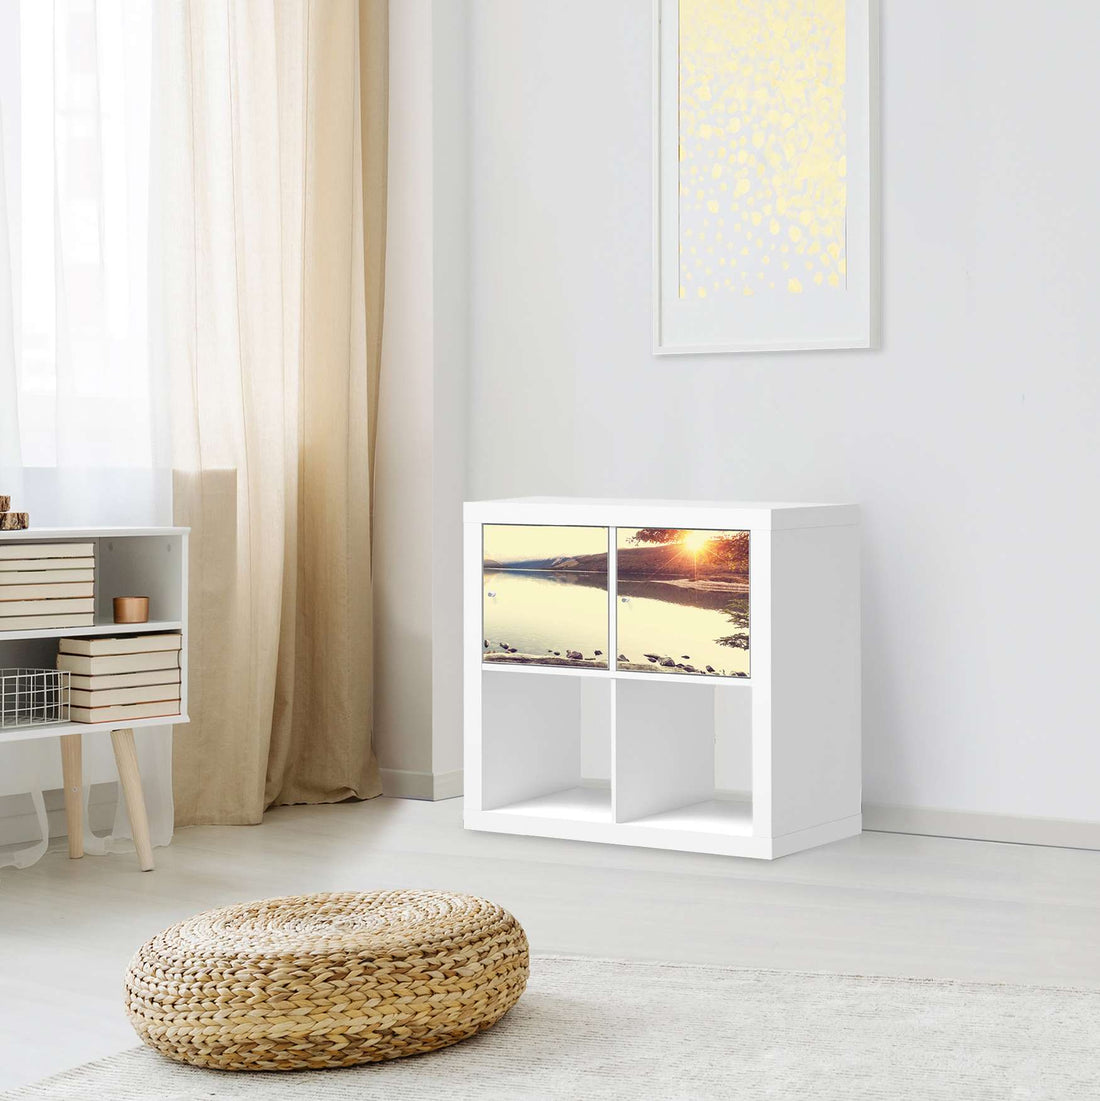 Möbel Klebefolie Seaside Dreams - IKEA Expedit Regal 2 Türen Quer - Wohnzimmer